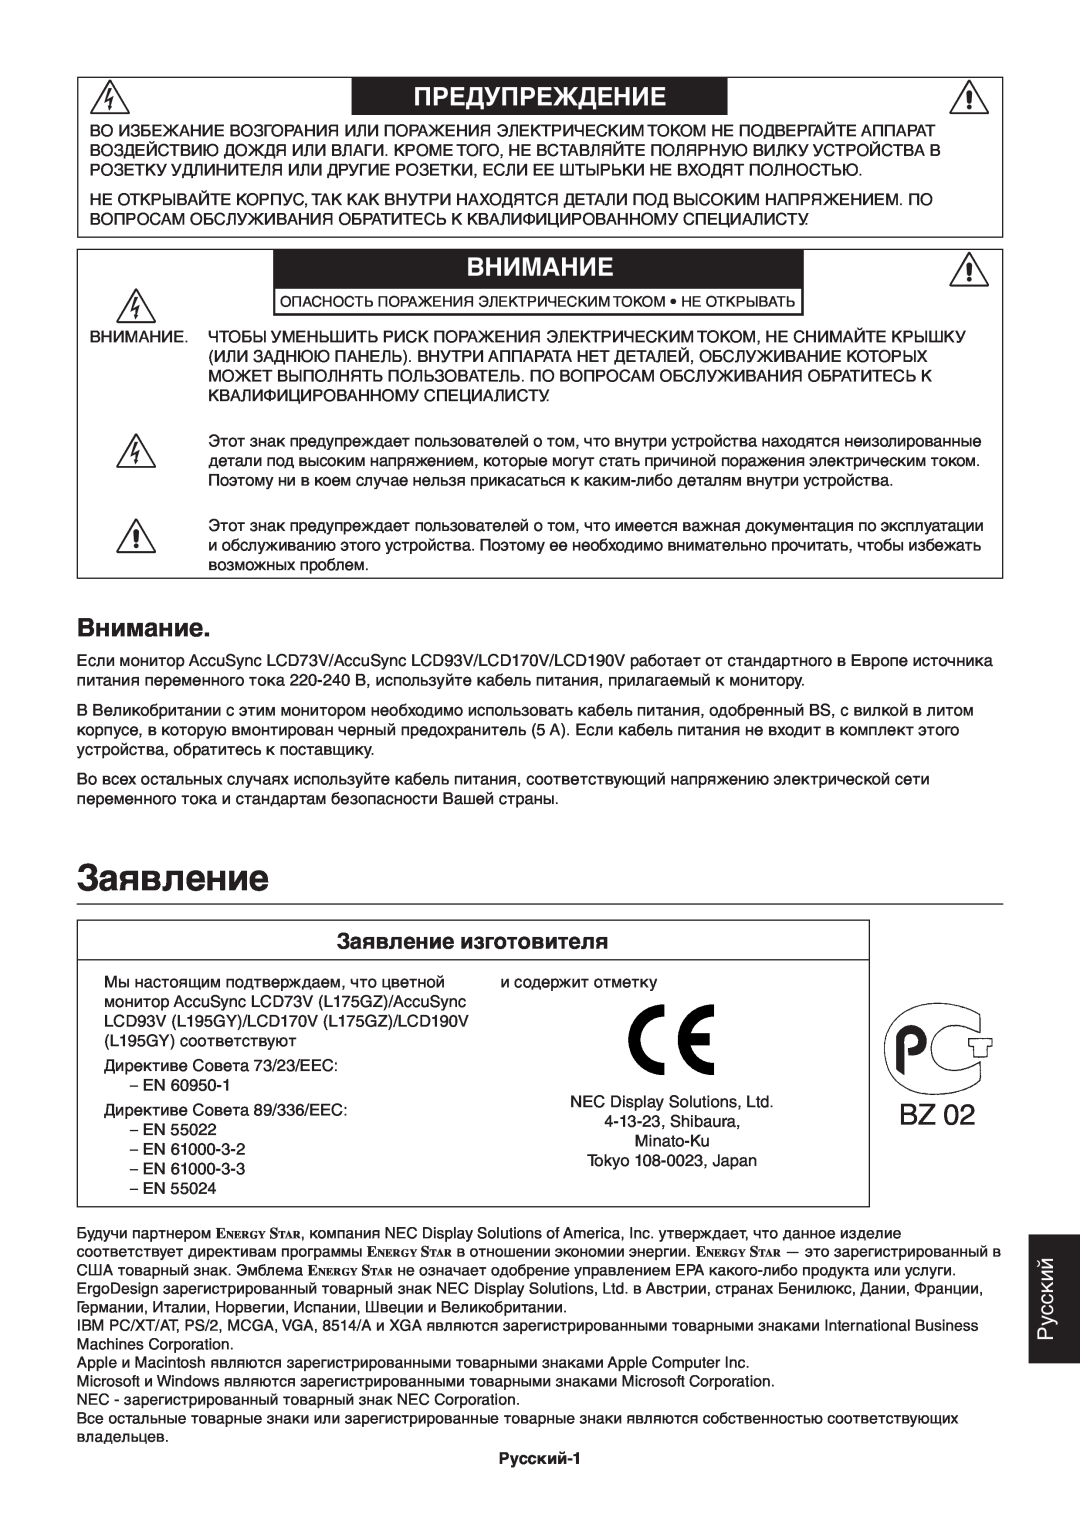 NEC ACCUSYNC LCD73V, ACCUSYNC LCD93V manual Заявление, Внимание, Предупреждение, Русский-1 